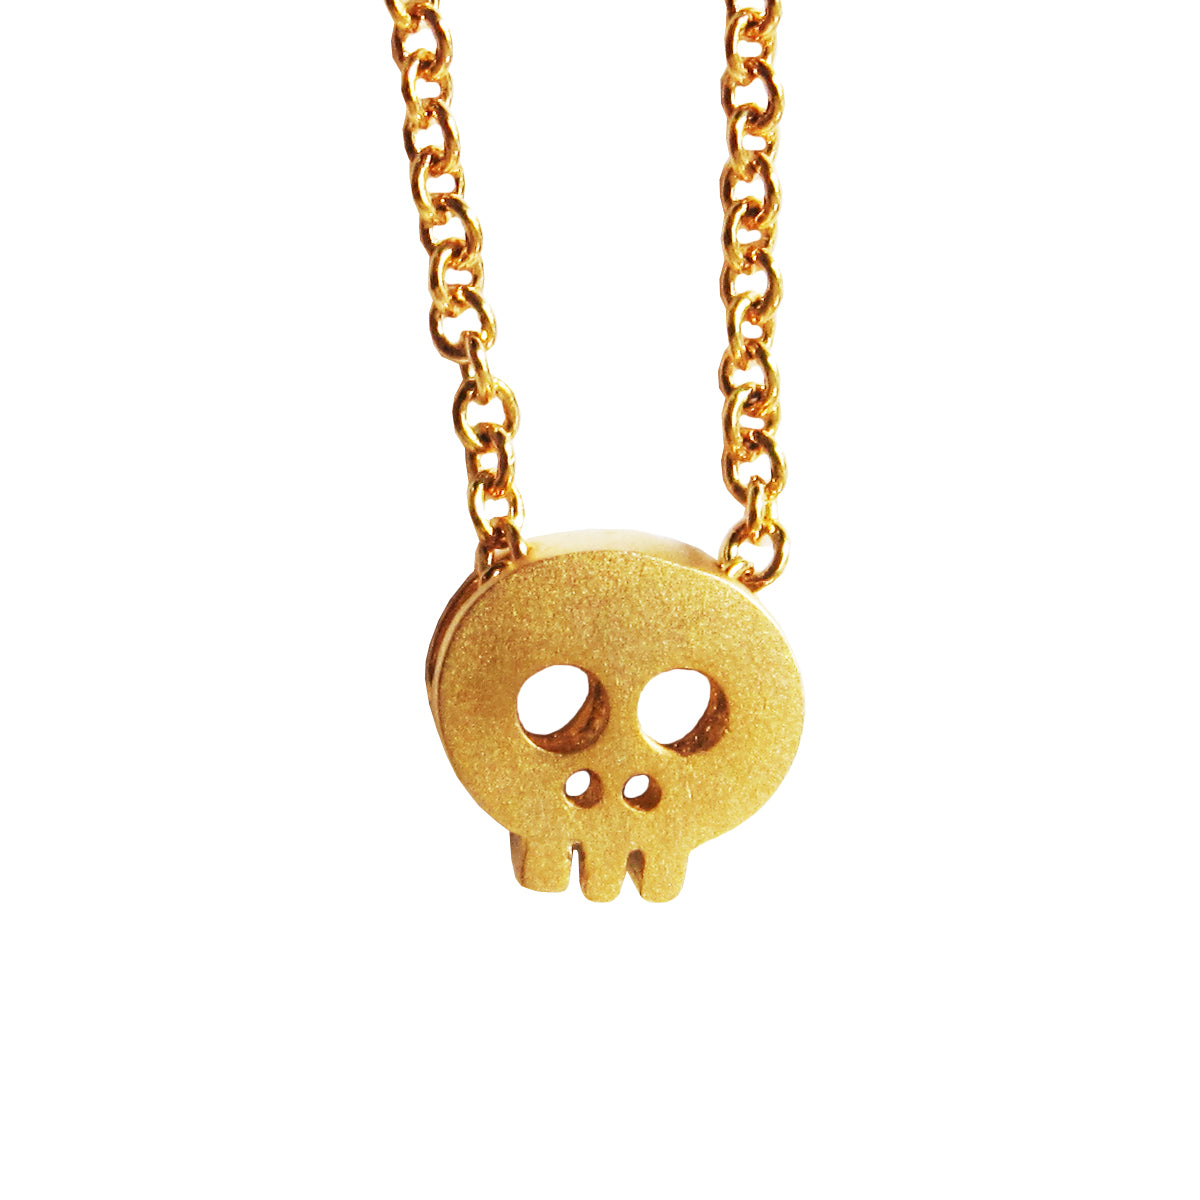 Rebecca Skull Necklace Gold.jpg